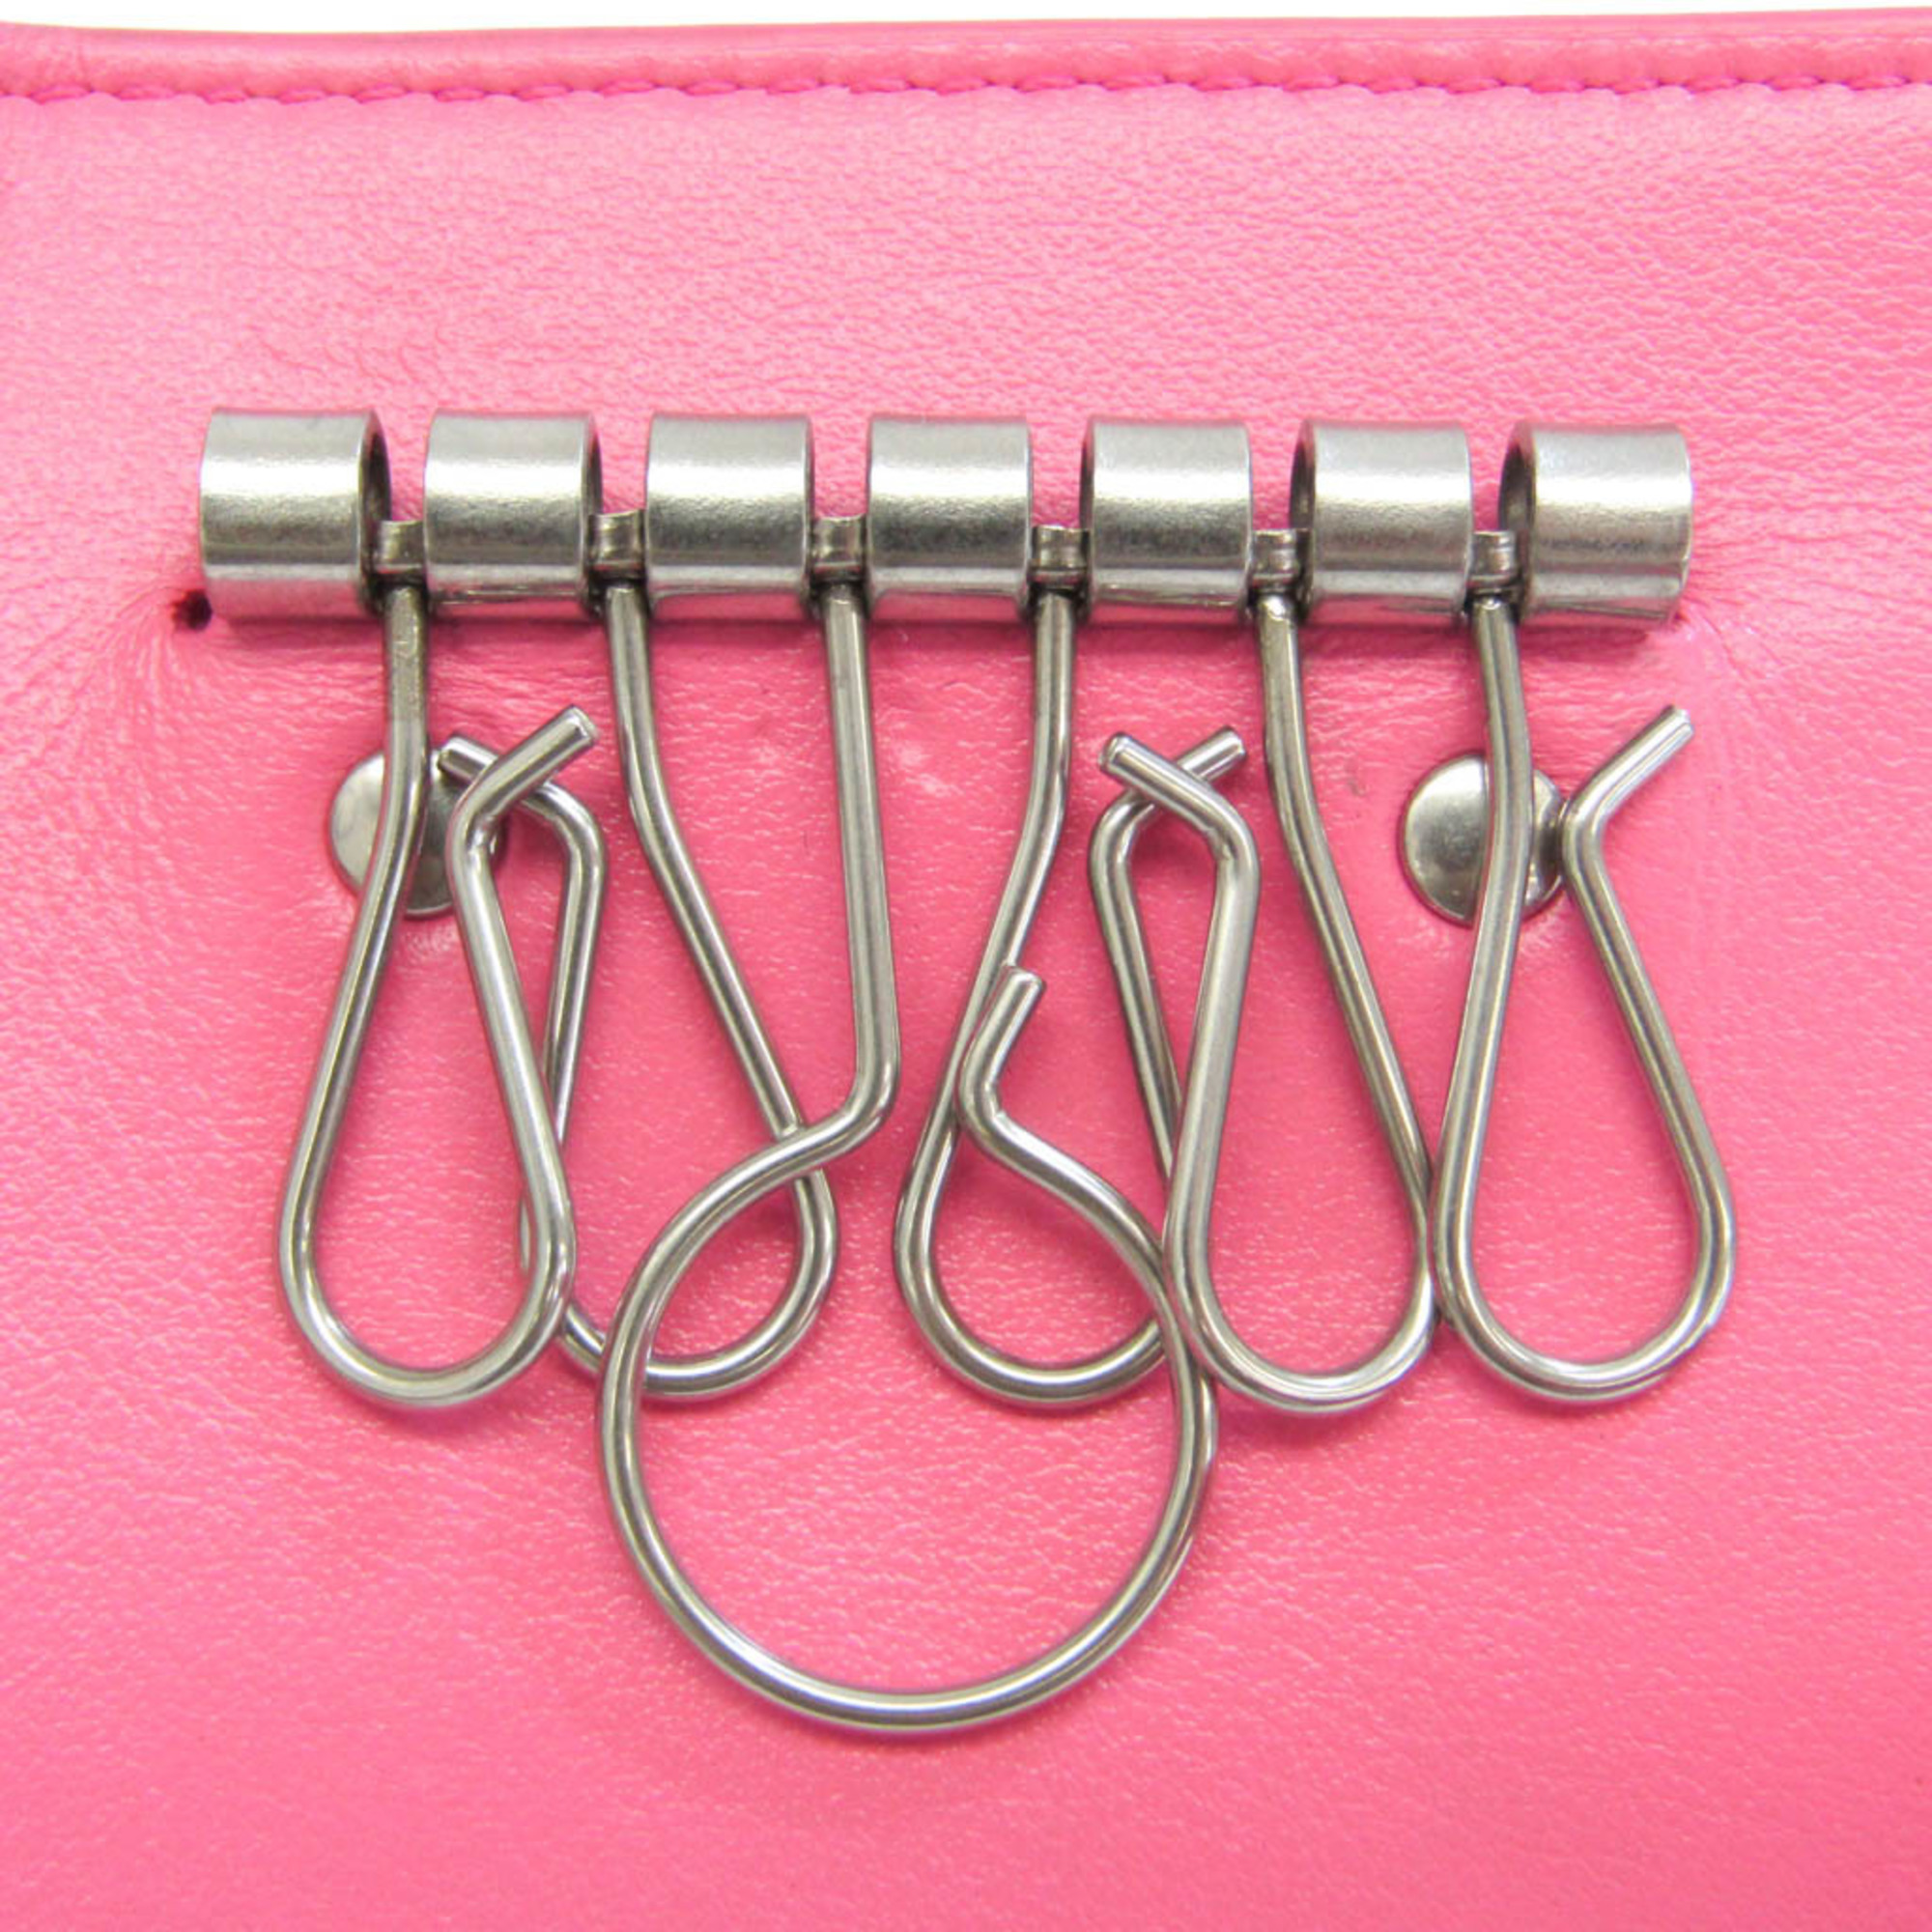 Bottega Veneta Intrecciato Women's Leather Key Case Pink